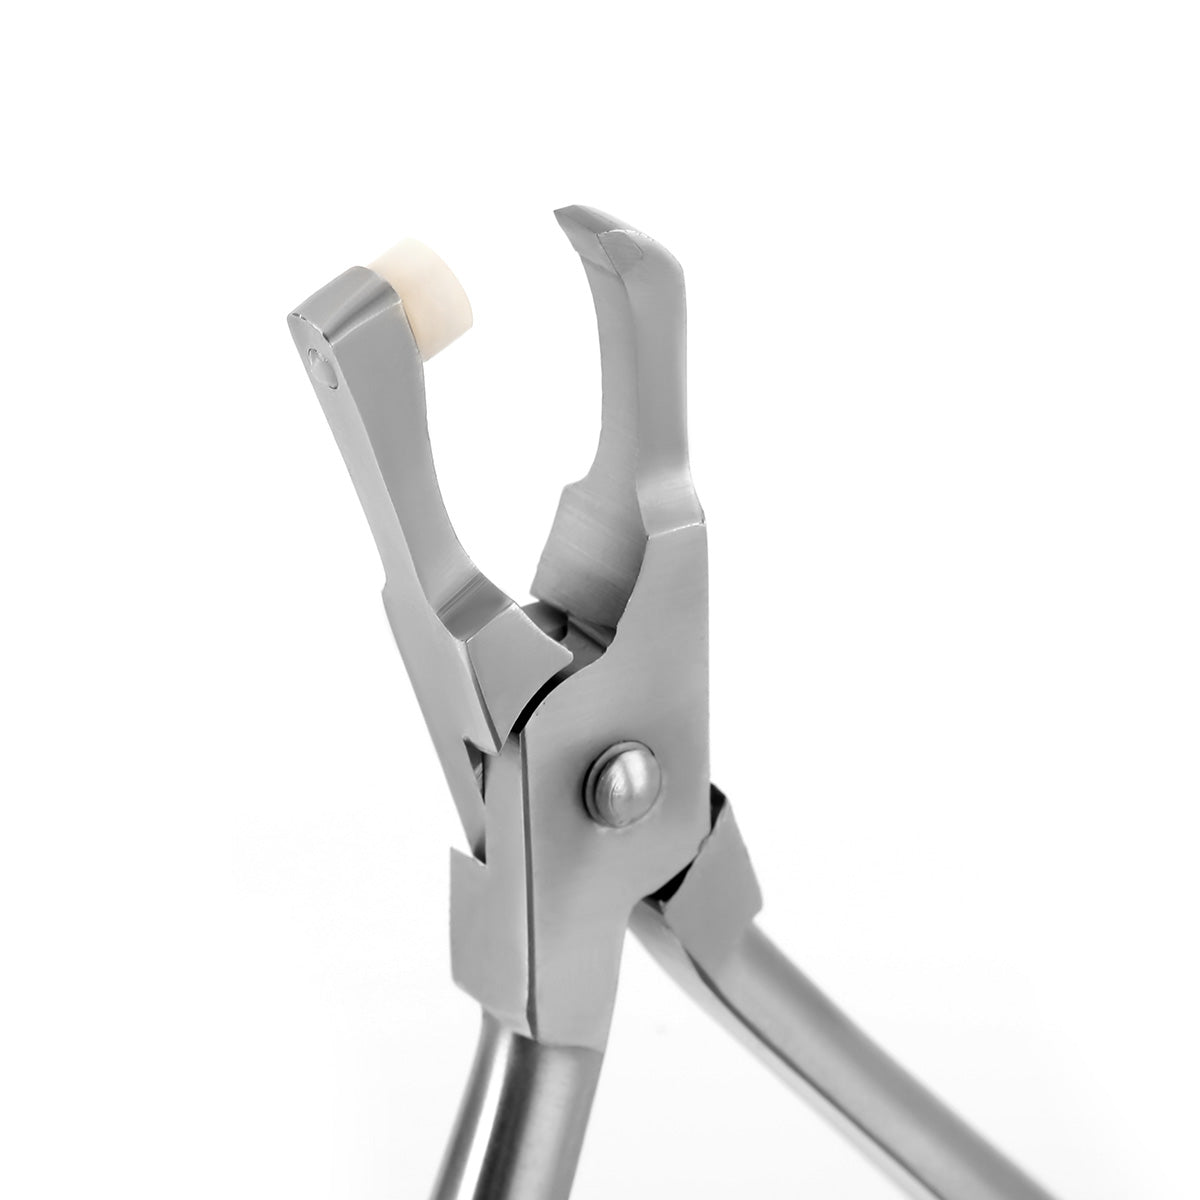 Orthodontic Band Remove Plier - azdentall.com